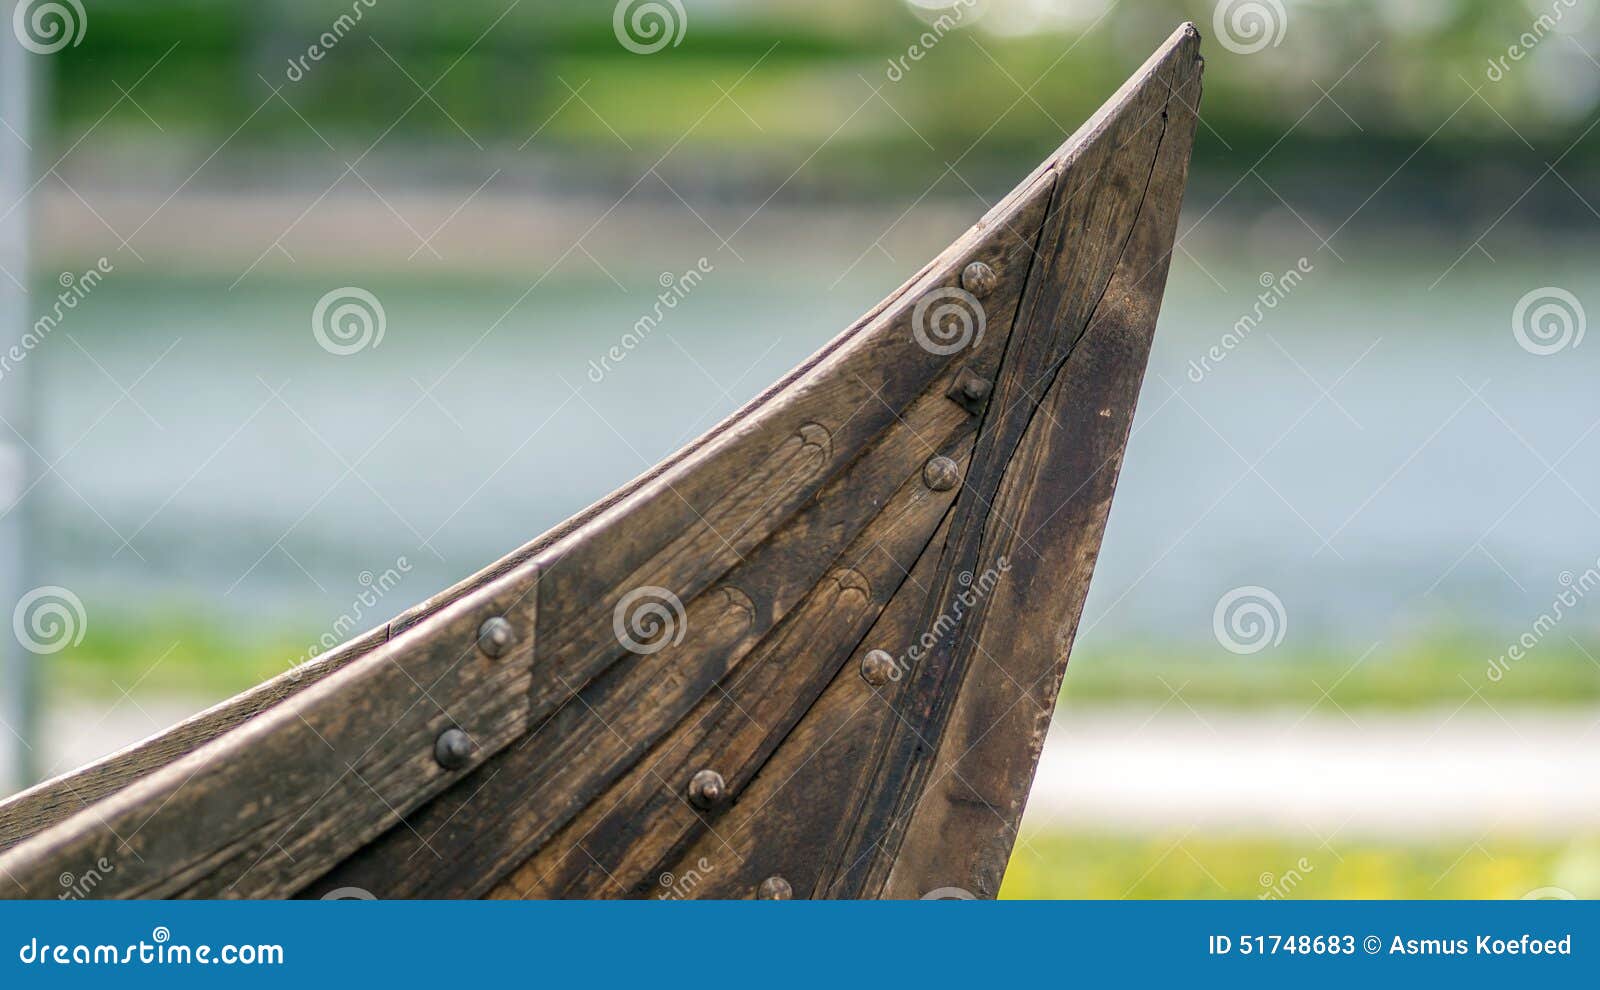 Small viking ship like boat bow showing the clinker built hull.